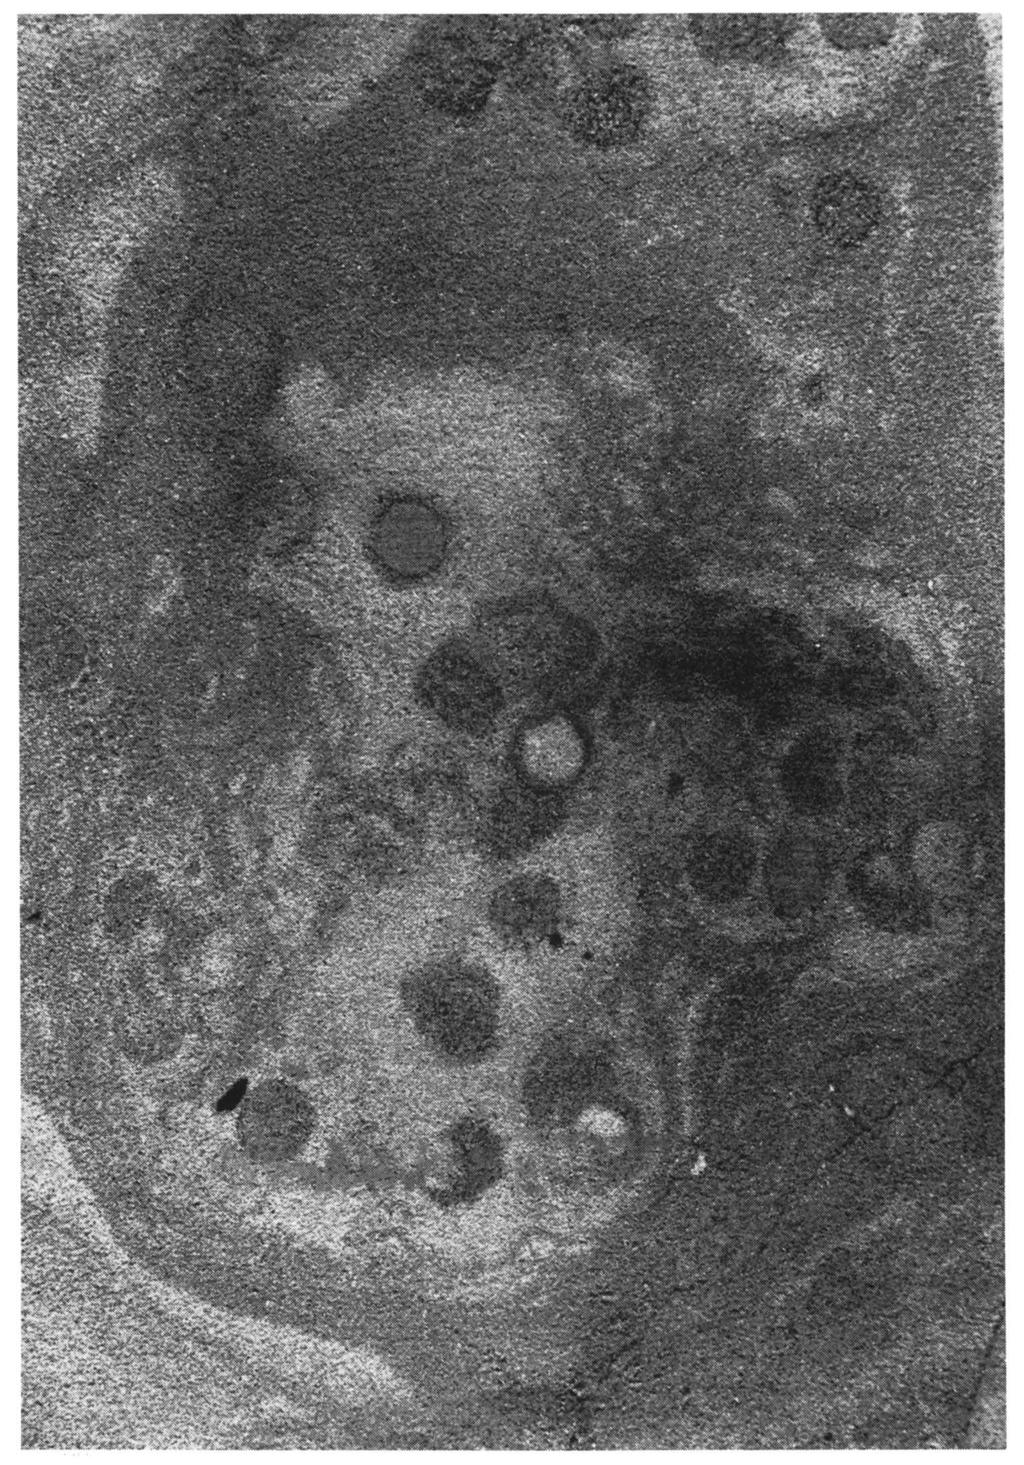 Fig. 9. Dwarsdoorsnede van een graafgangbundel van Bathichnus multiturbatae nov. spec. Holotype No VG-2252, coll. W.M.